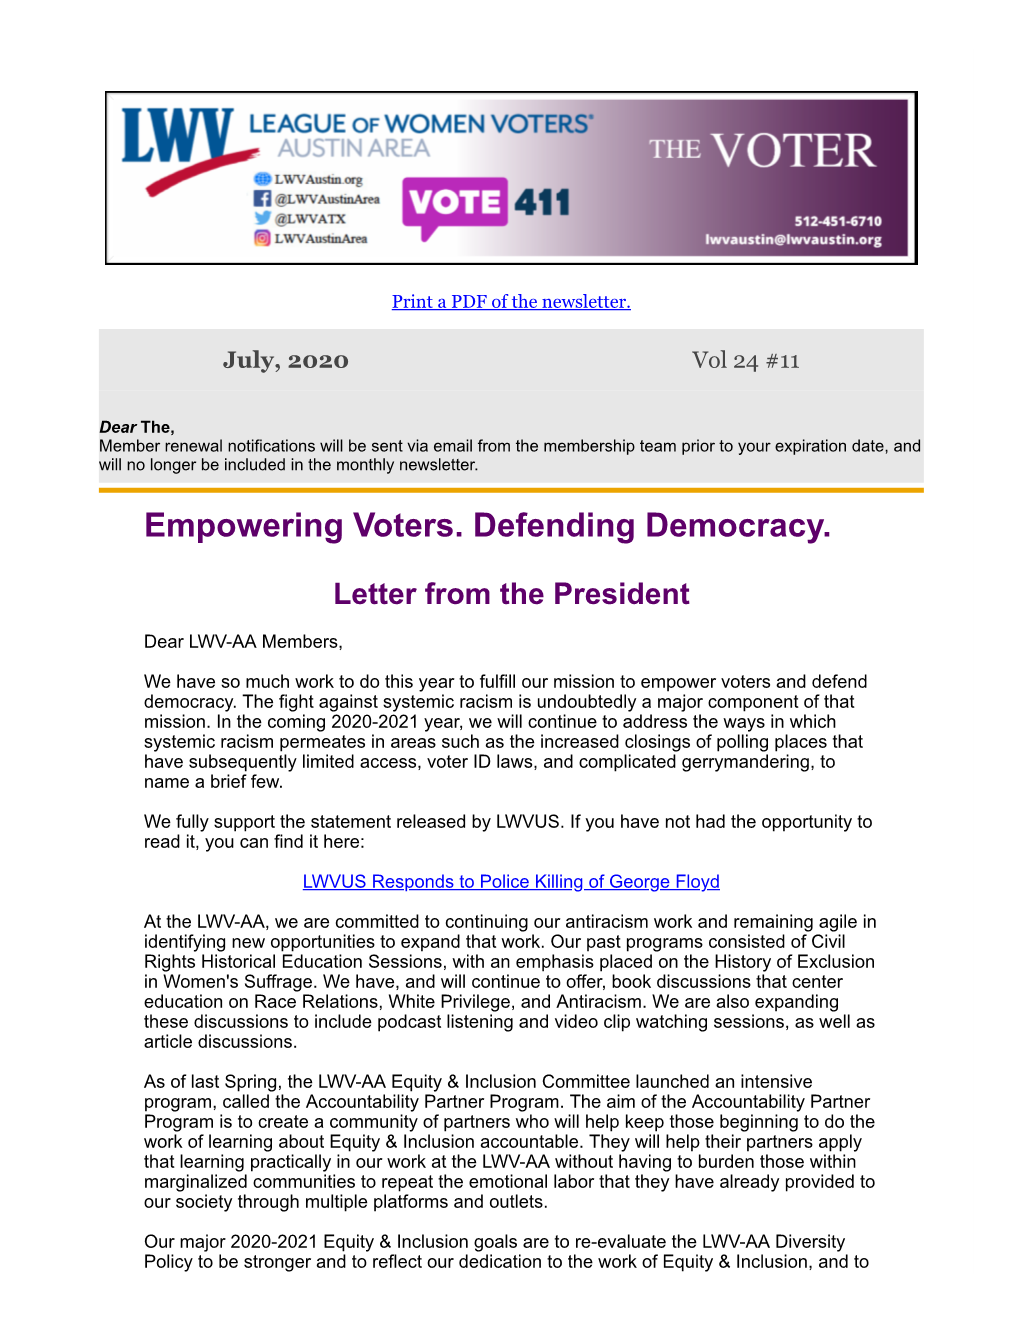 July 2020 Voter Newsletter